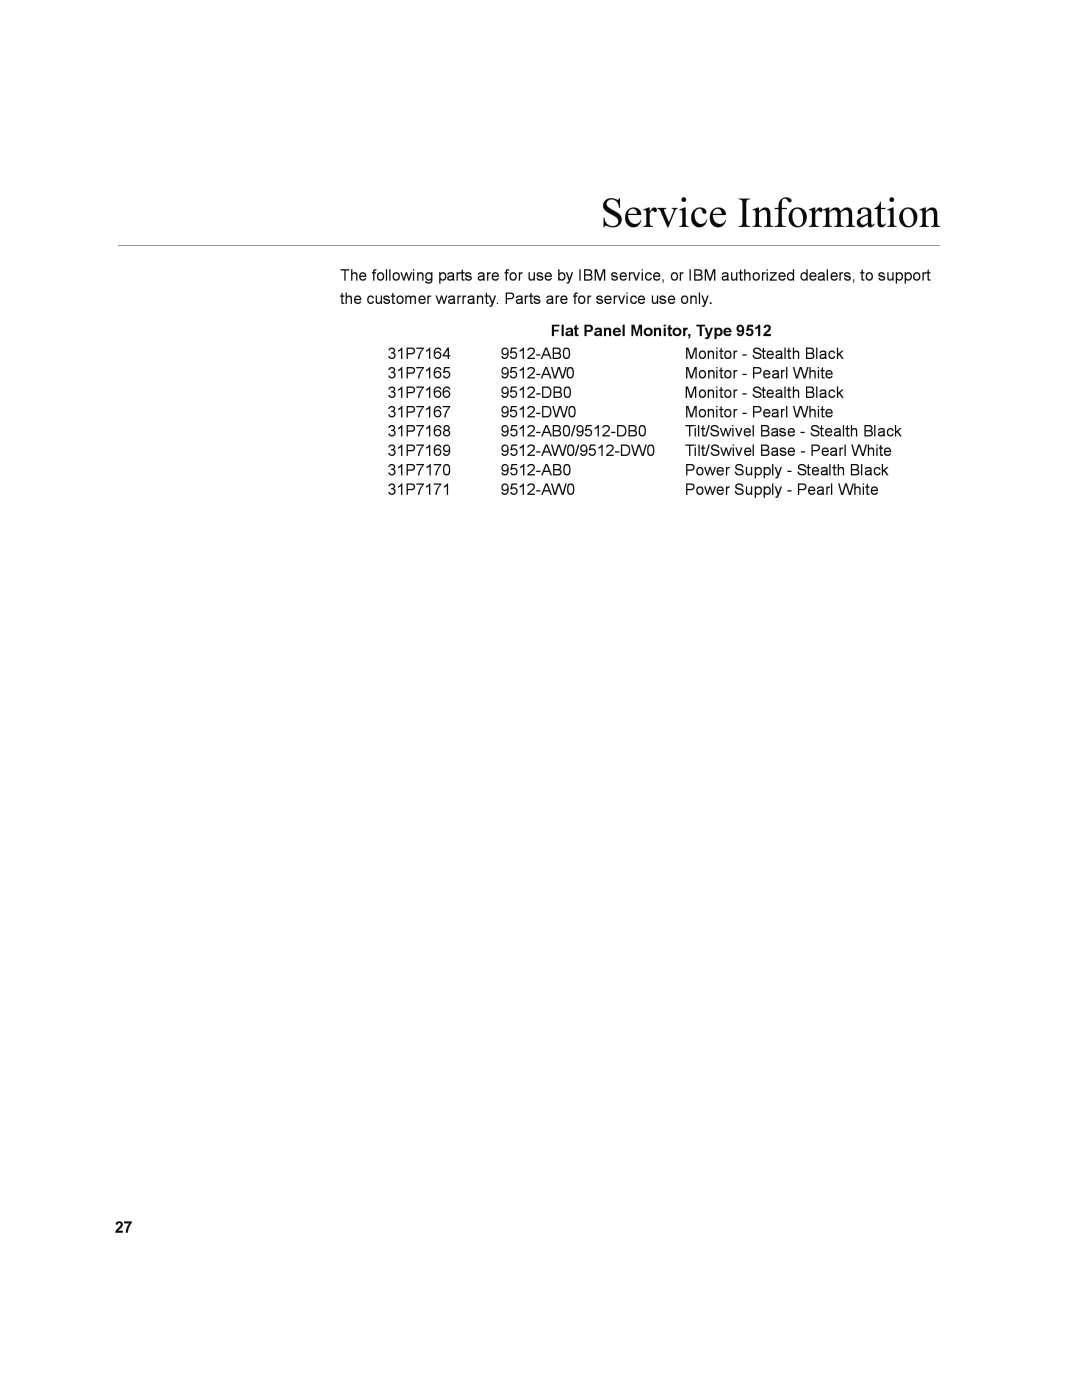 IBM T541A manual Service Information, Flat Panel Monitor, Type 